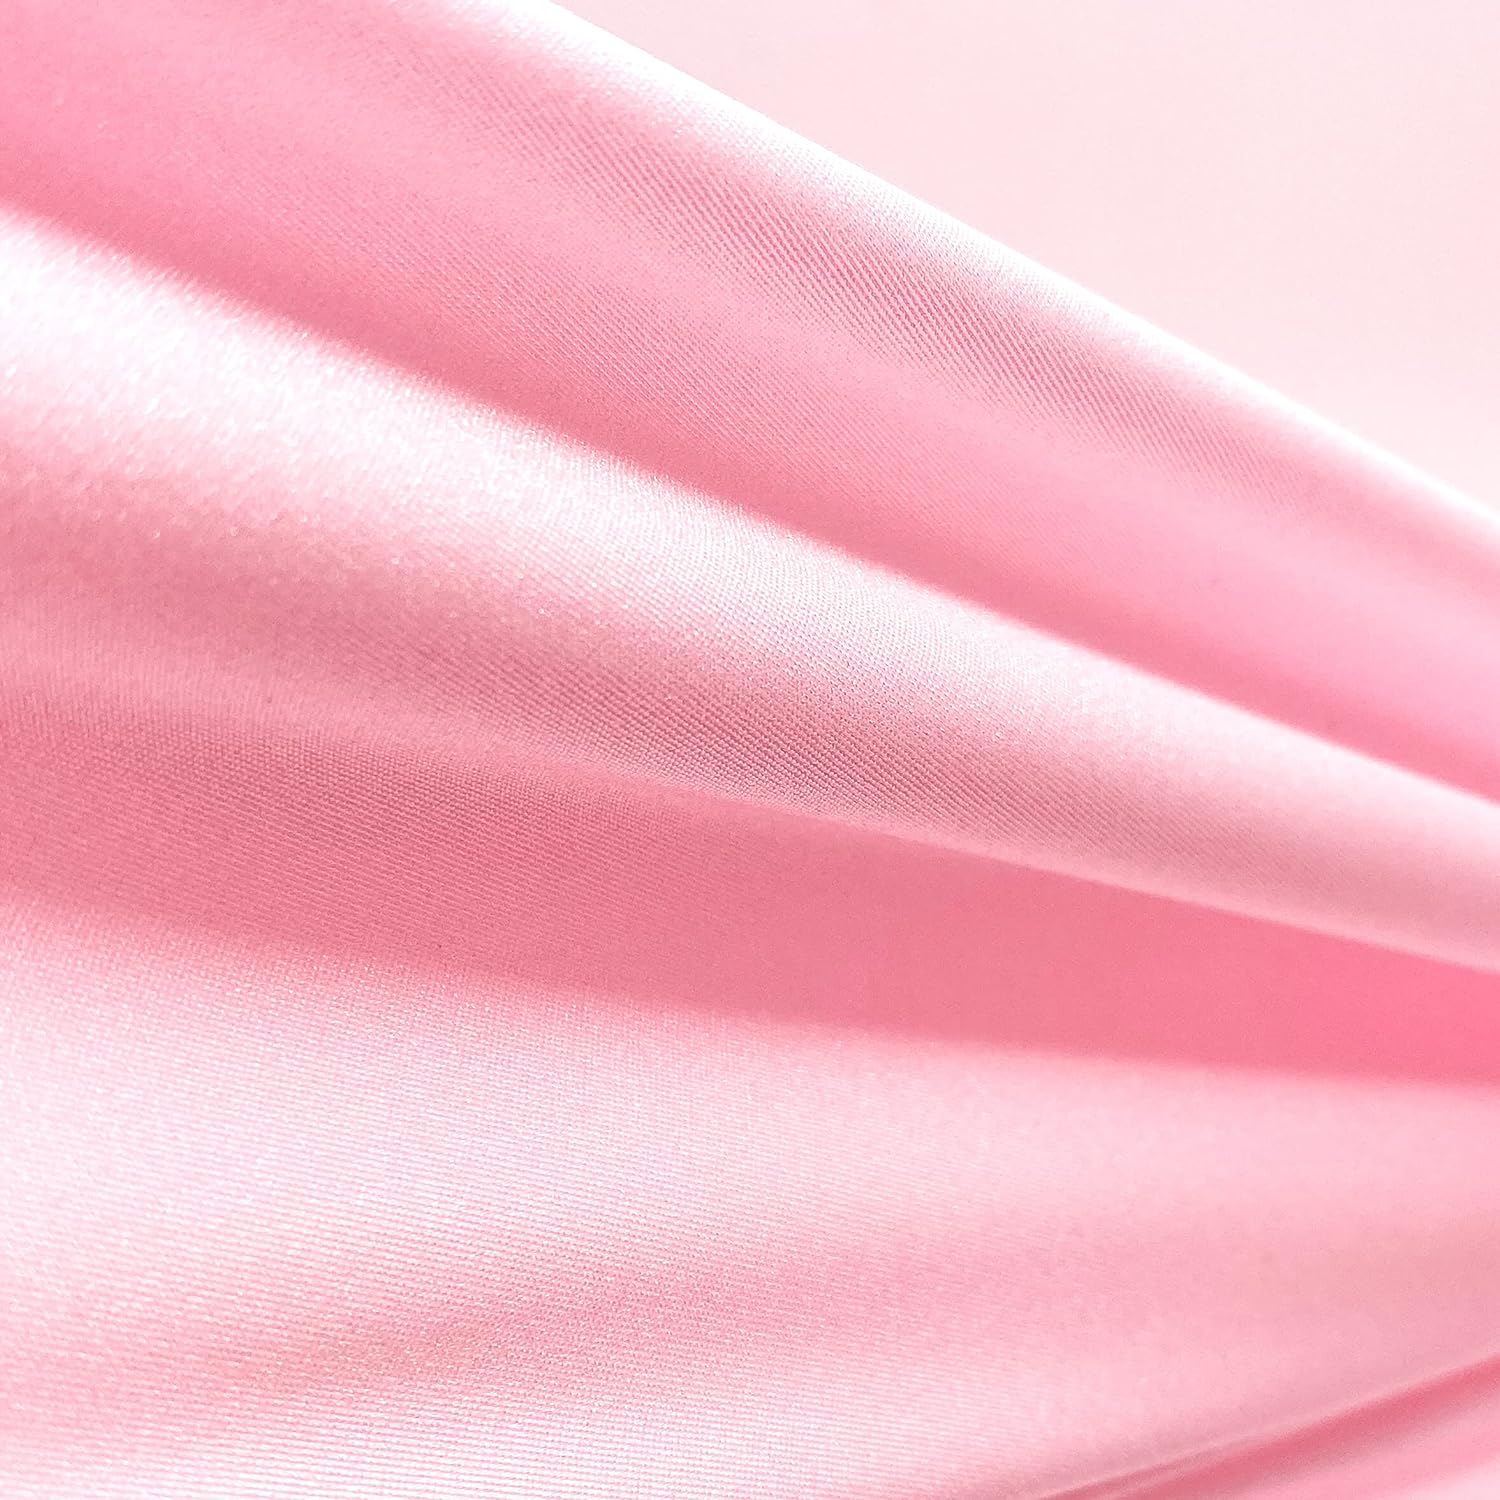 Light Pink Luxury Nylon Spandex Fabric By The YardICE FABRICSICE FABRICSBy The Yard (58" Width)Light Pink Luxury Nylon Spandex Fabric By The Yard ICE FABRICS